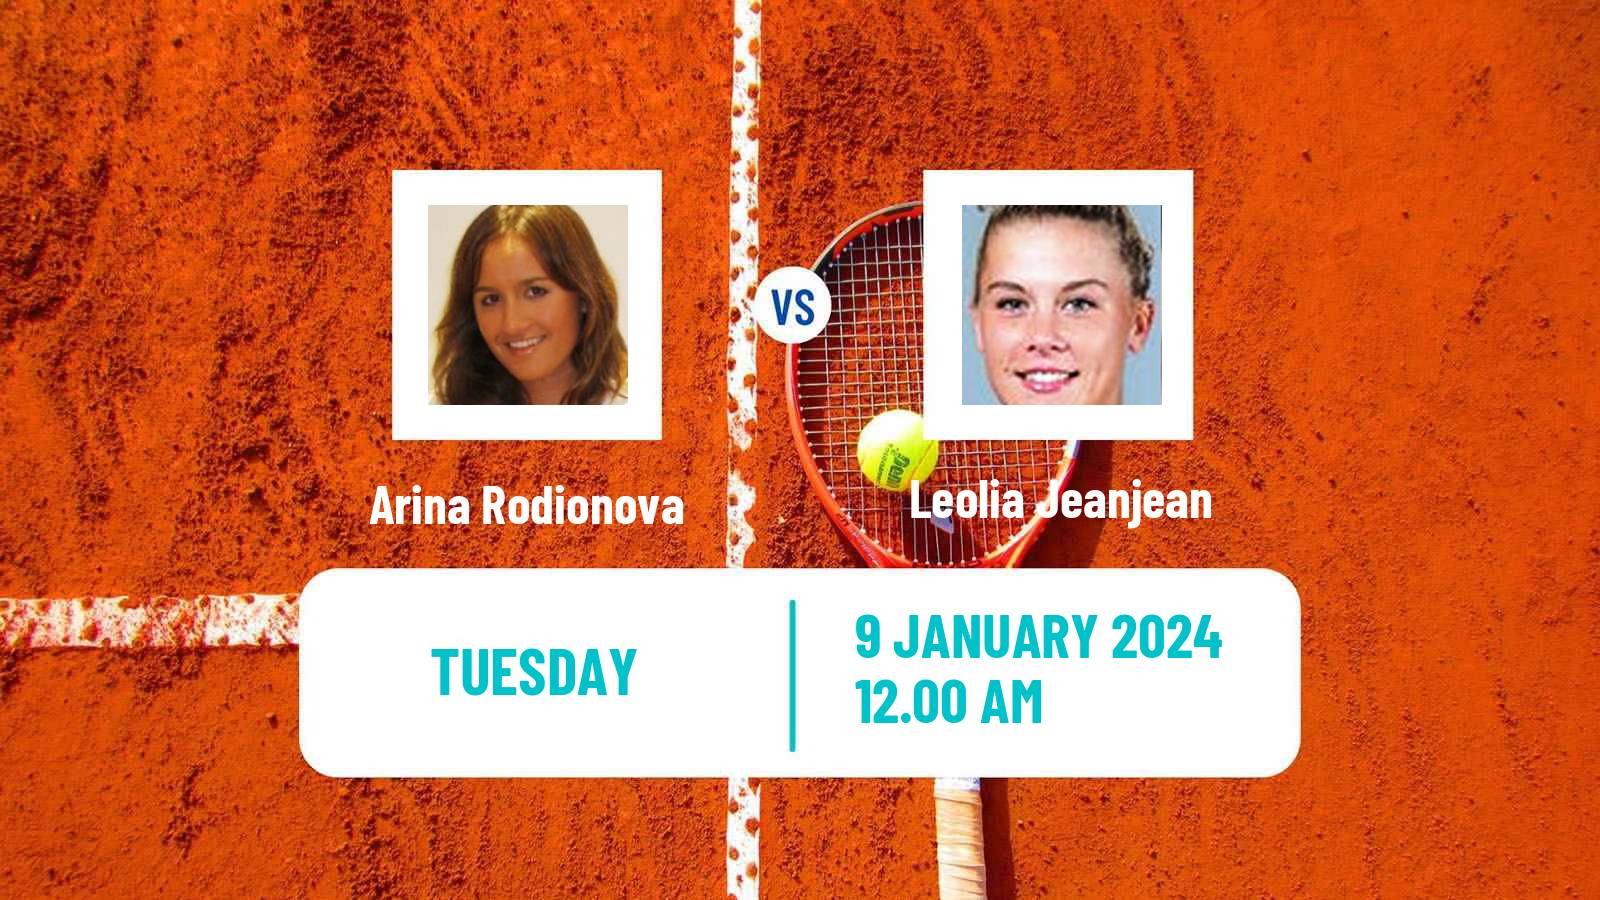 Tennis WTA Australian Open Arina Rodionova - Leolia Jeanjean